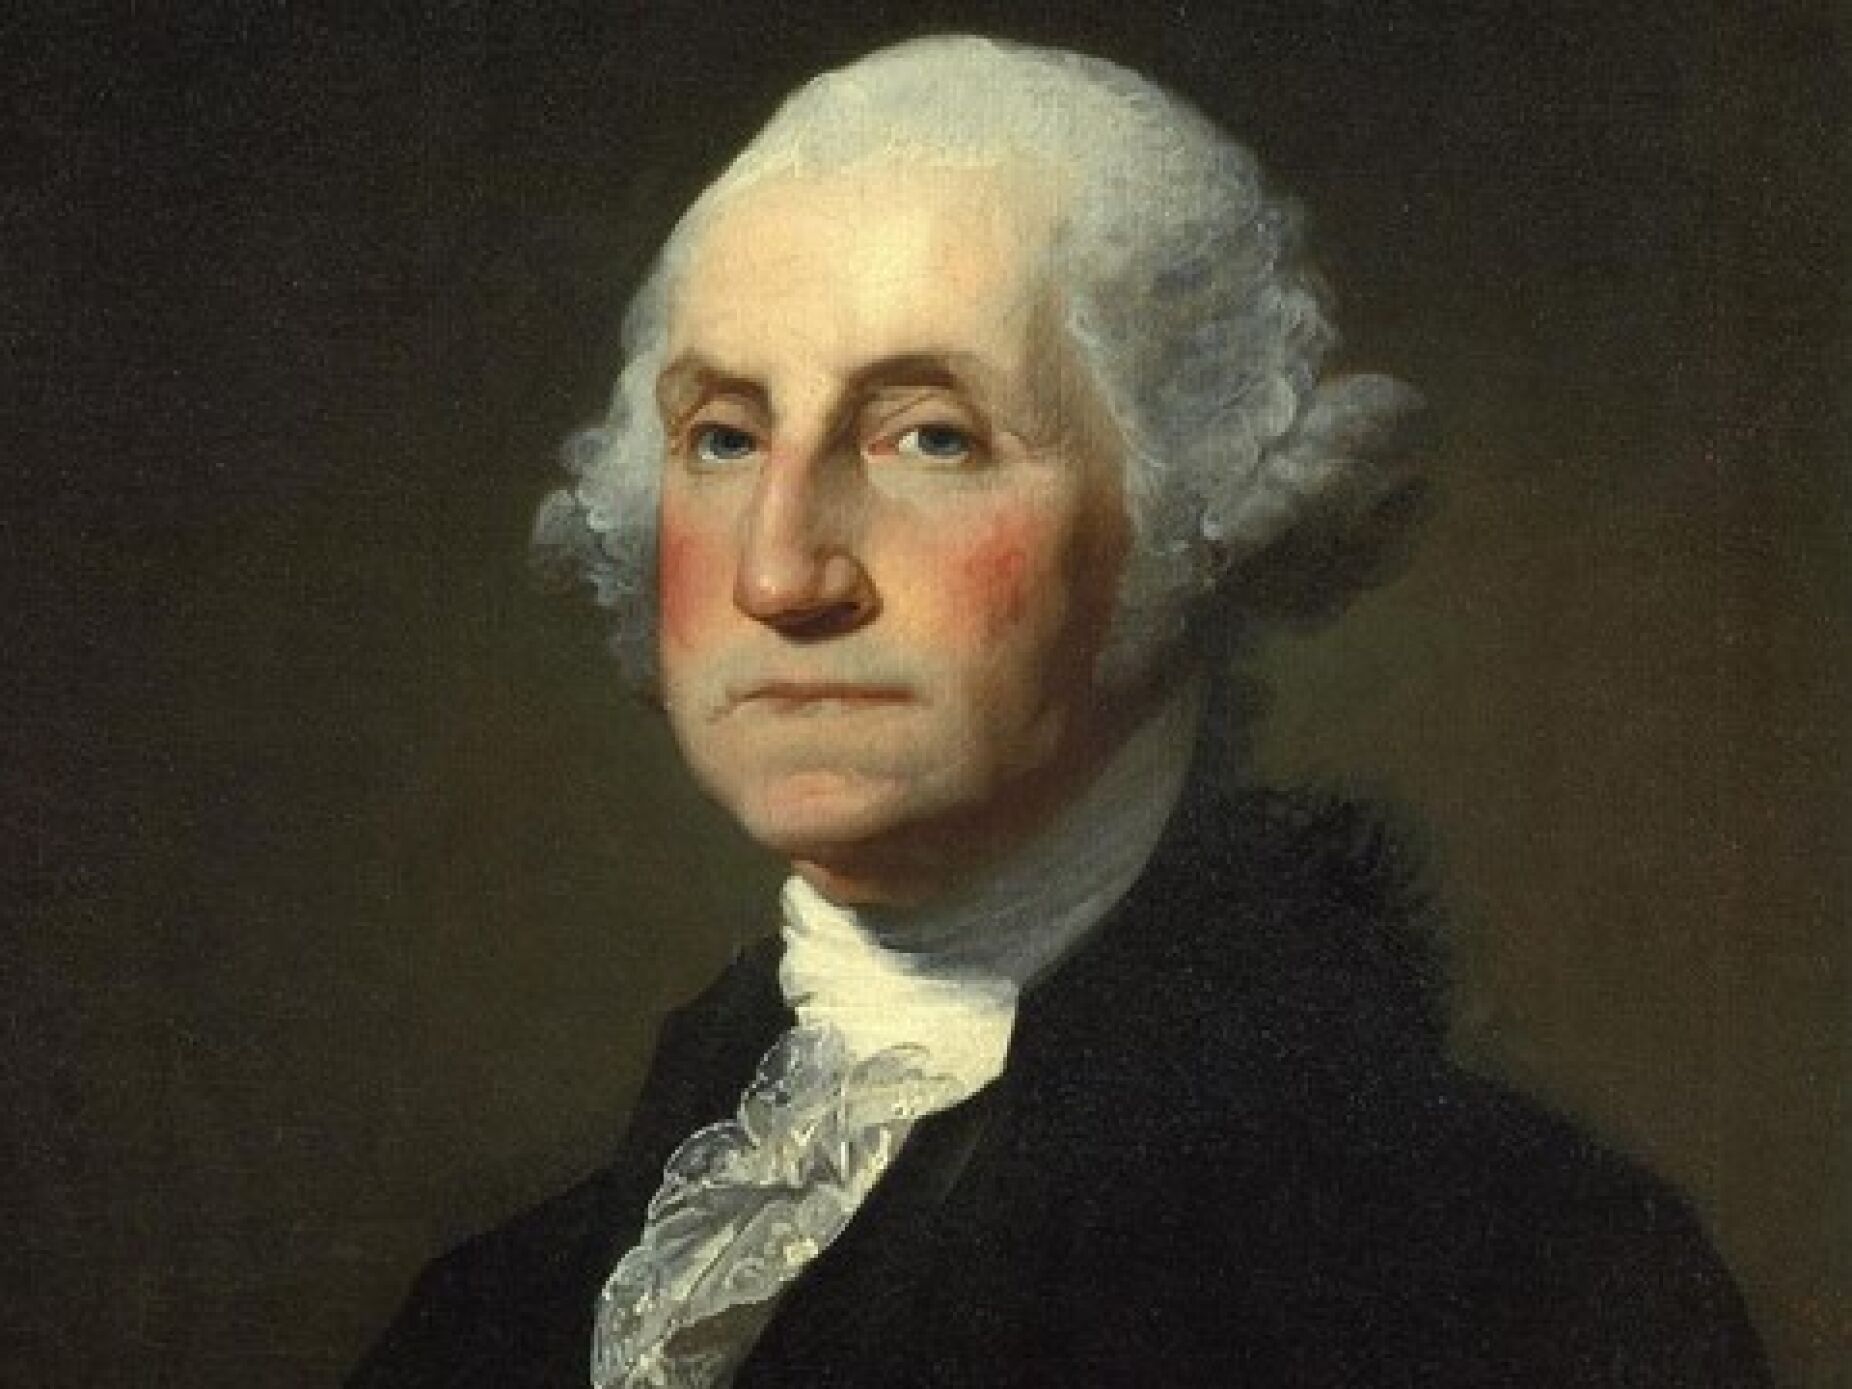 Novas técnicas de ADN identificam restos mortais de familiares de George Washington